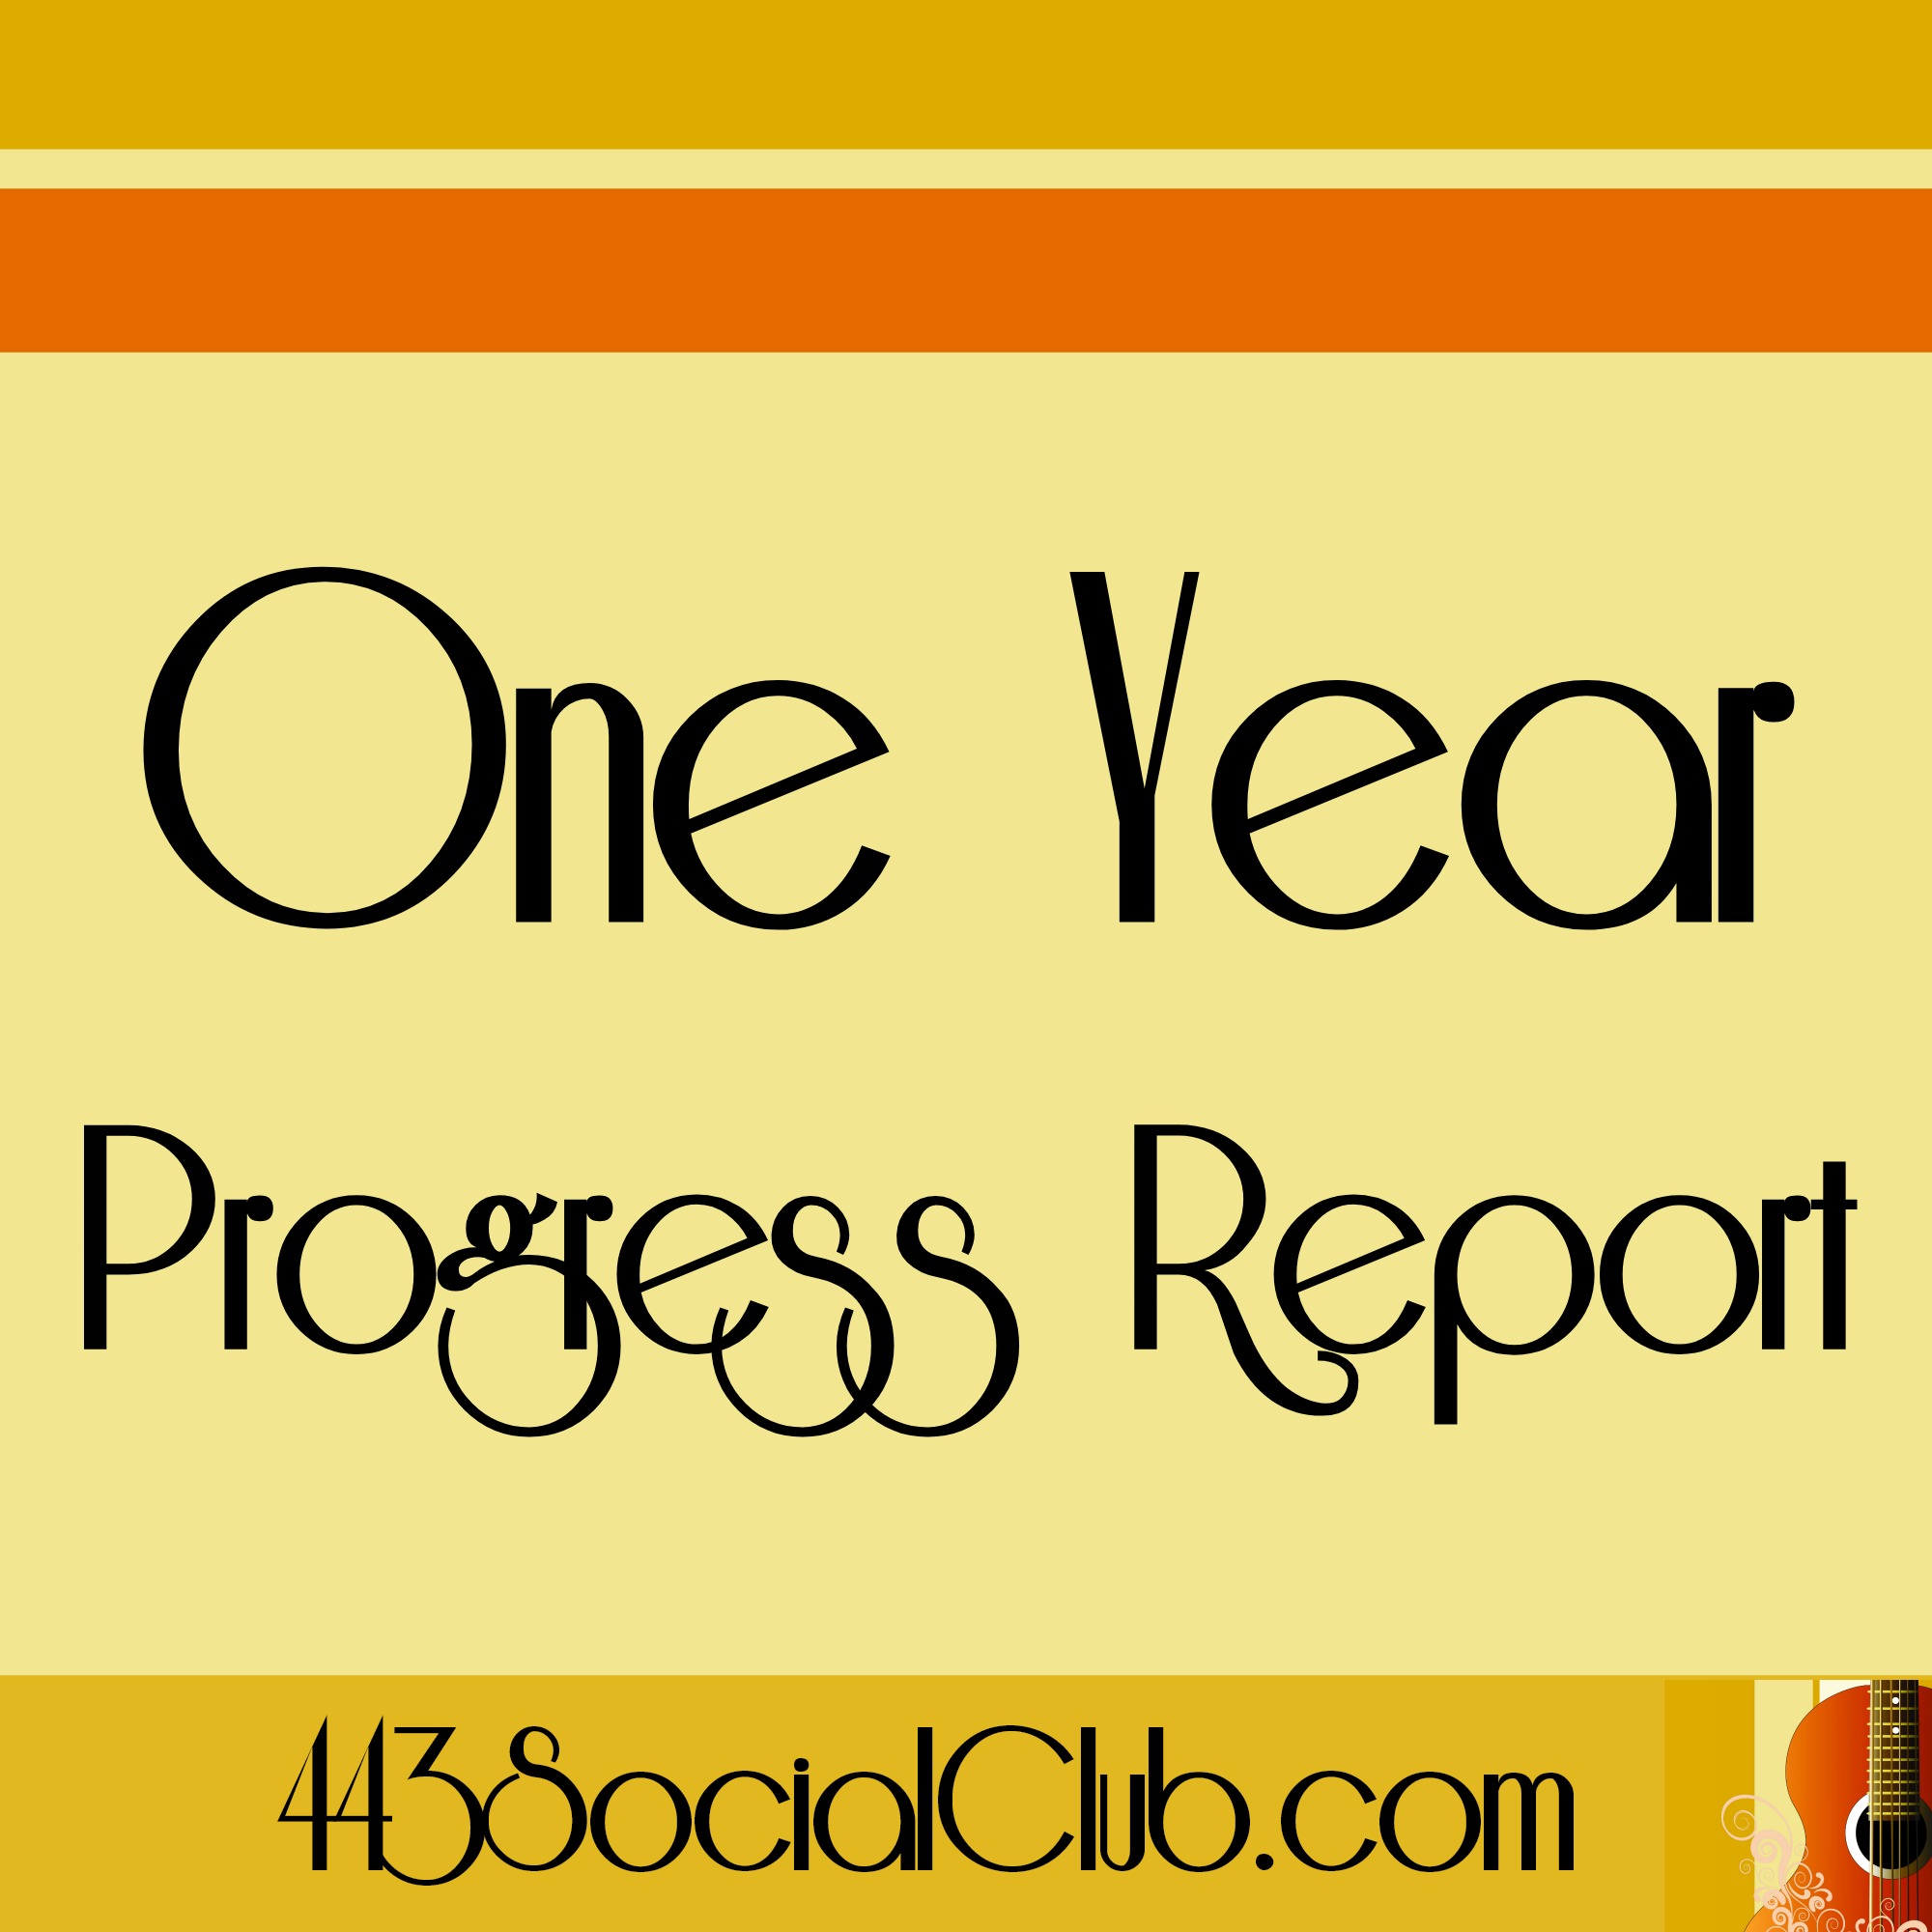 443 One Year Progress Report